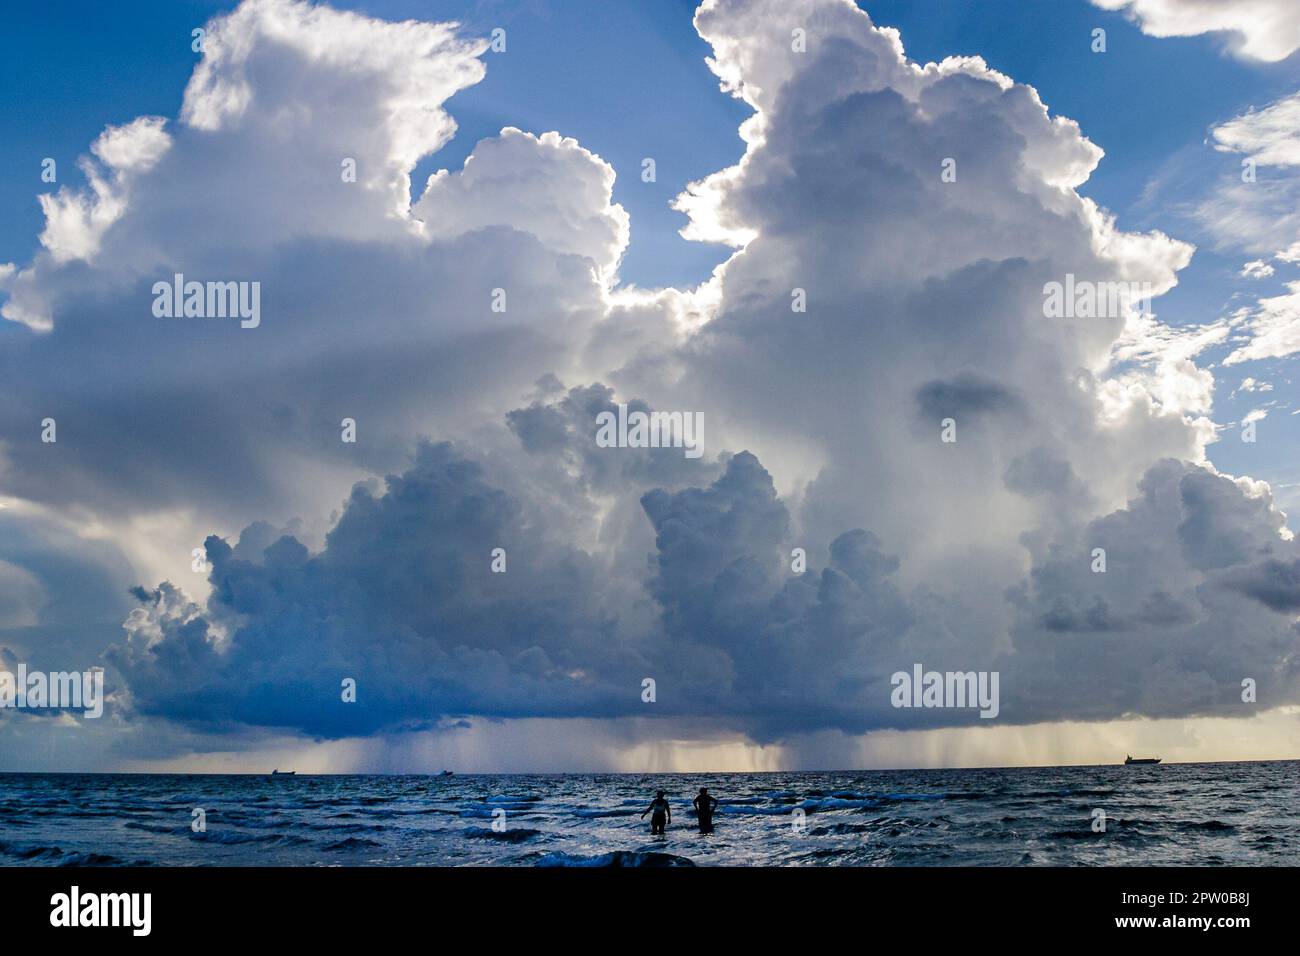 Miami Beach Florida, Atlantikküste, Sonnenaufgang Wolken Wetter Klimawandel Sturmregen, Stockfoto